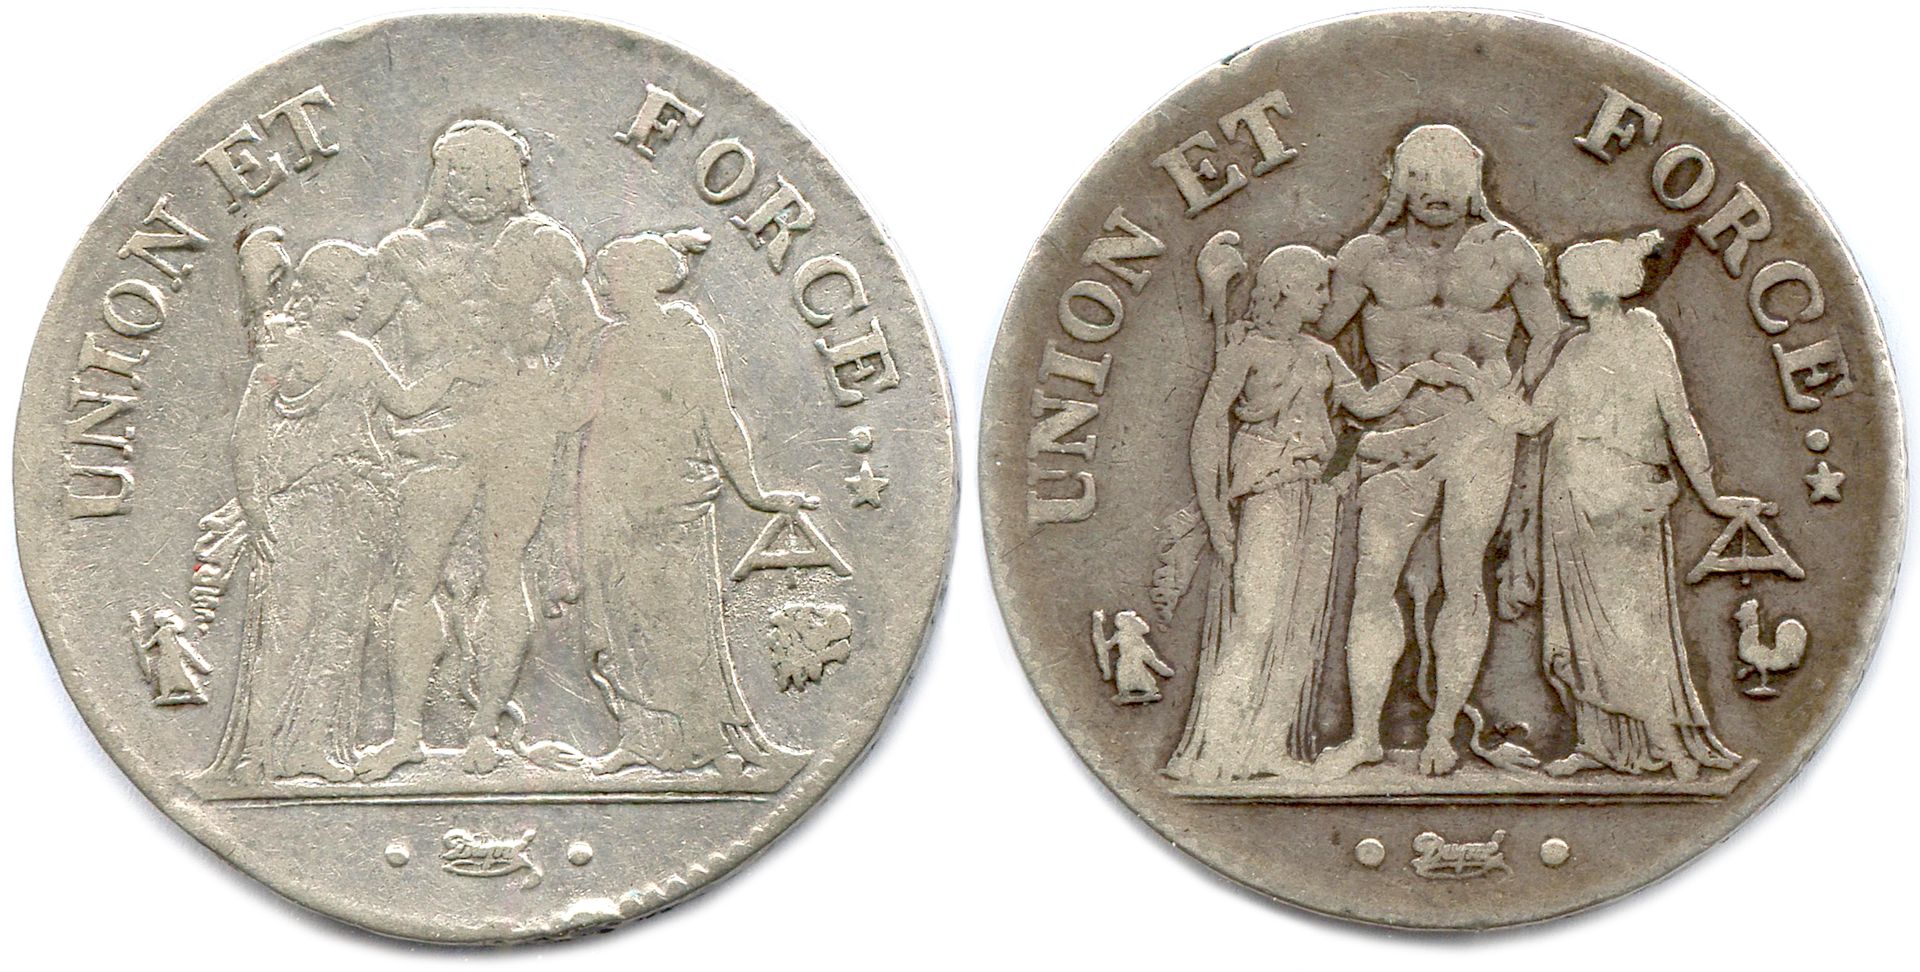 Null DIRECTOIRE 23. Oktober 1795 - 10. November 1799

Zwei Münzen: 5 Francs Herc&hellip;